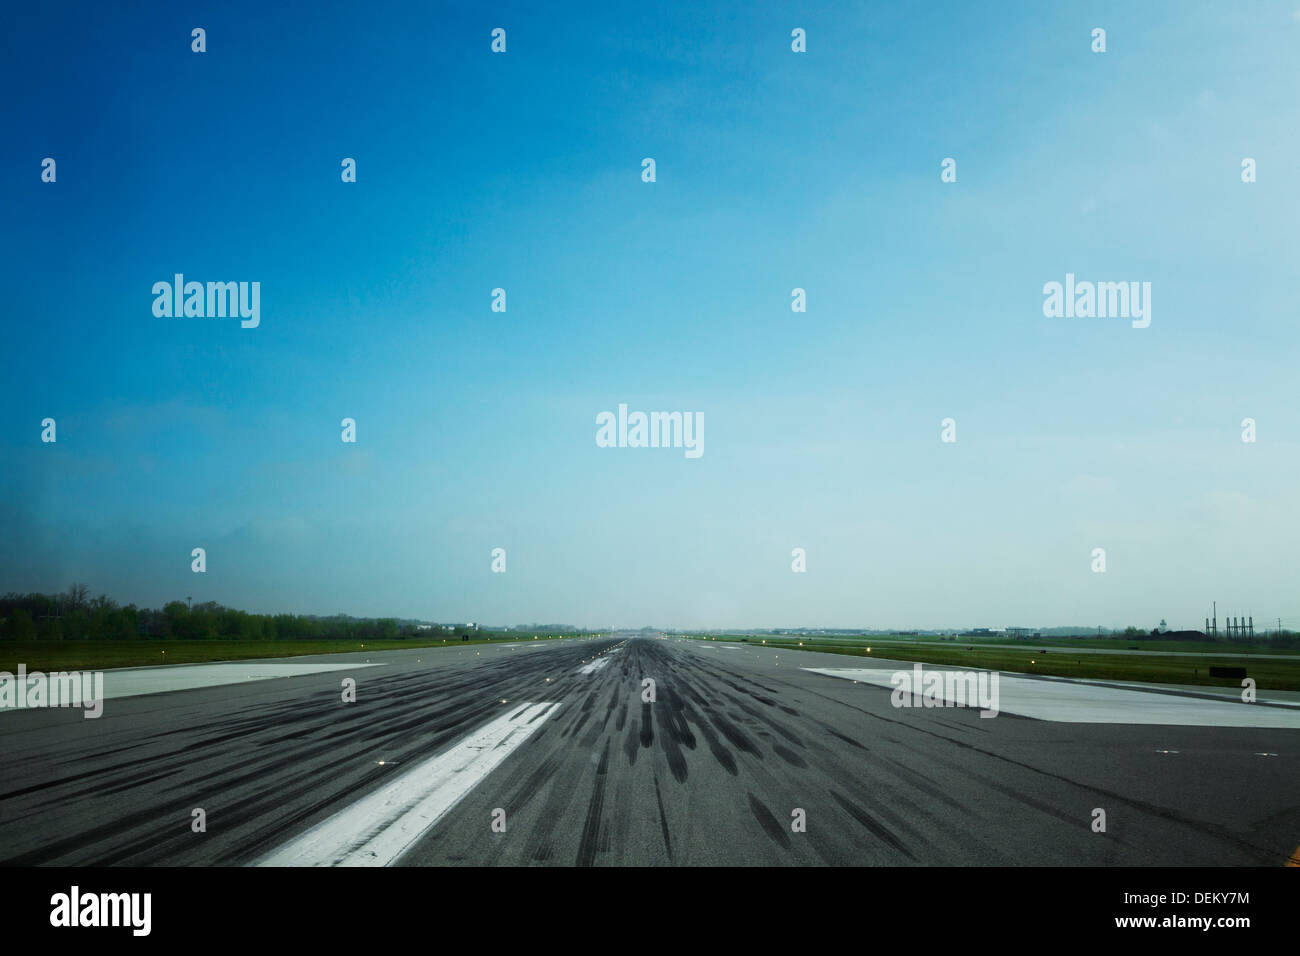 Markings on airplane runway Stock Photo